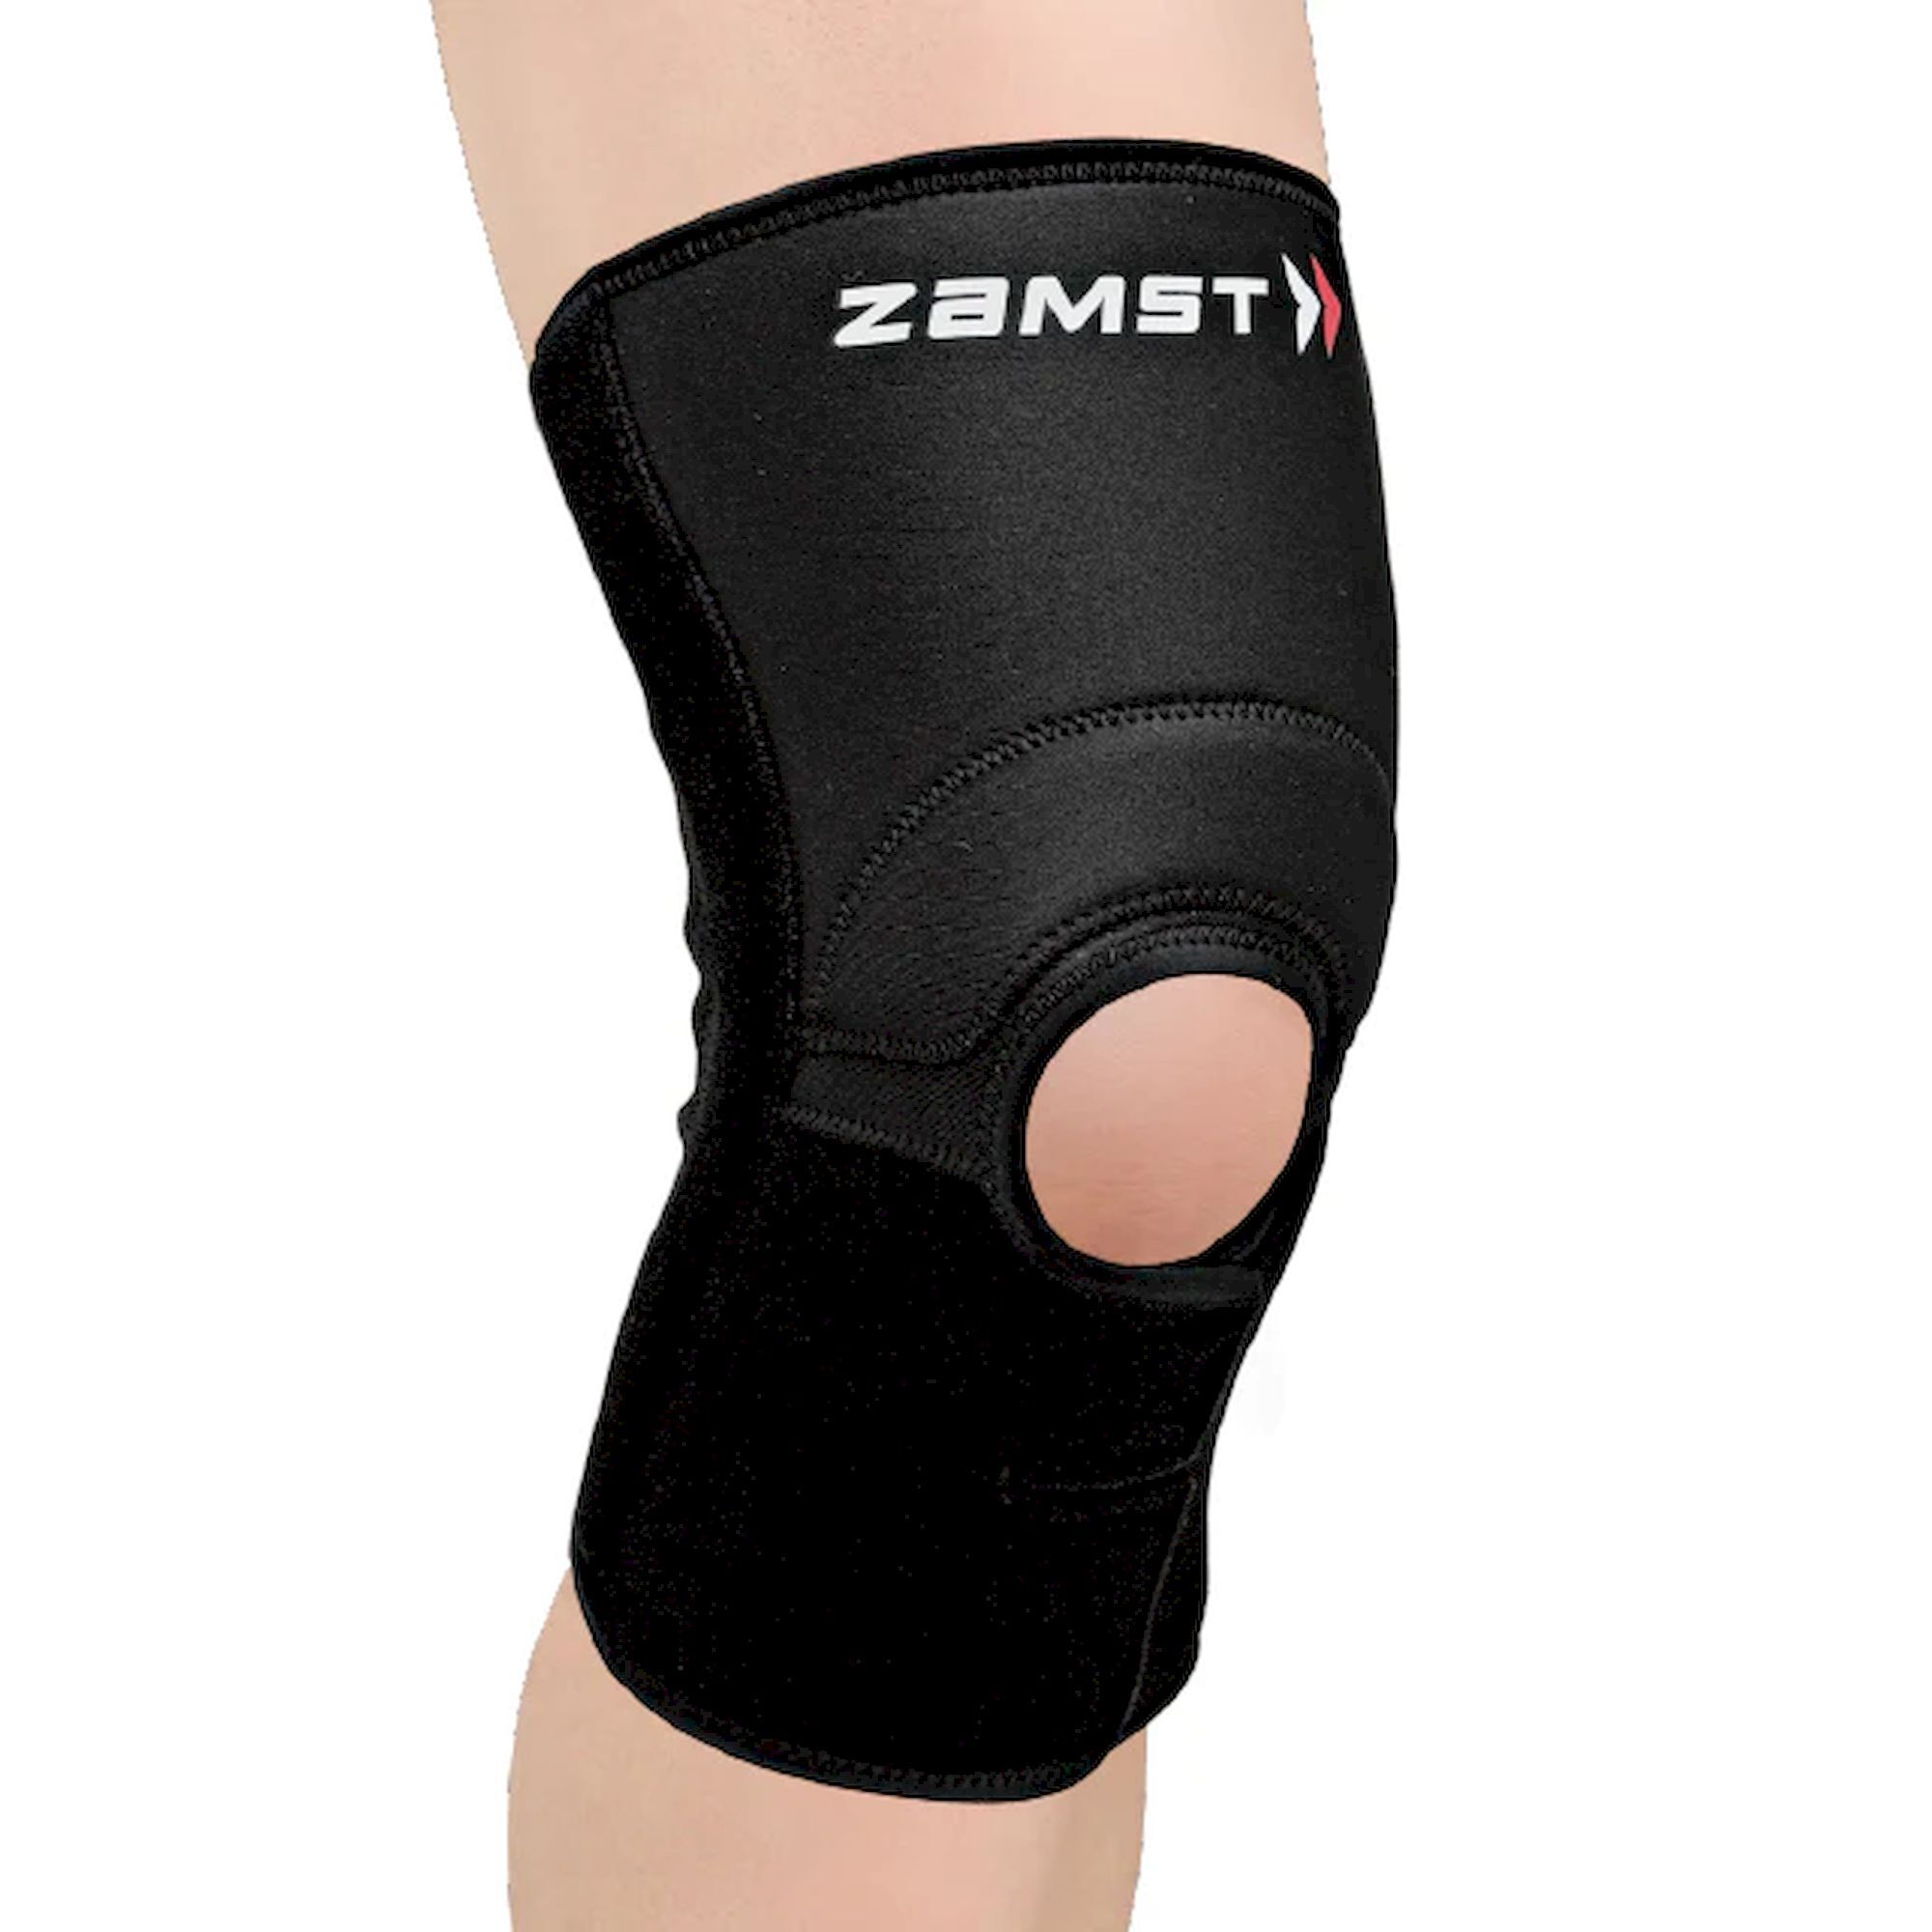 Zamst ZK-3 - Knee brace | Hardloop